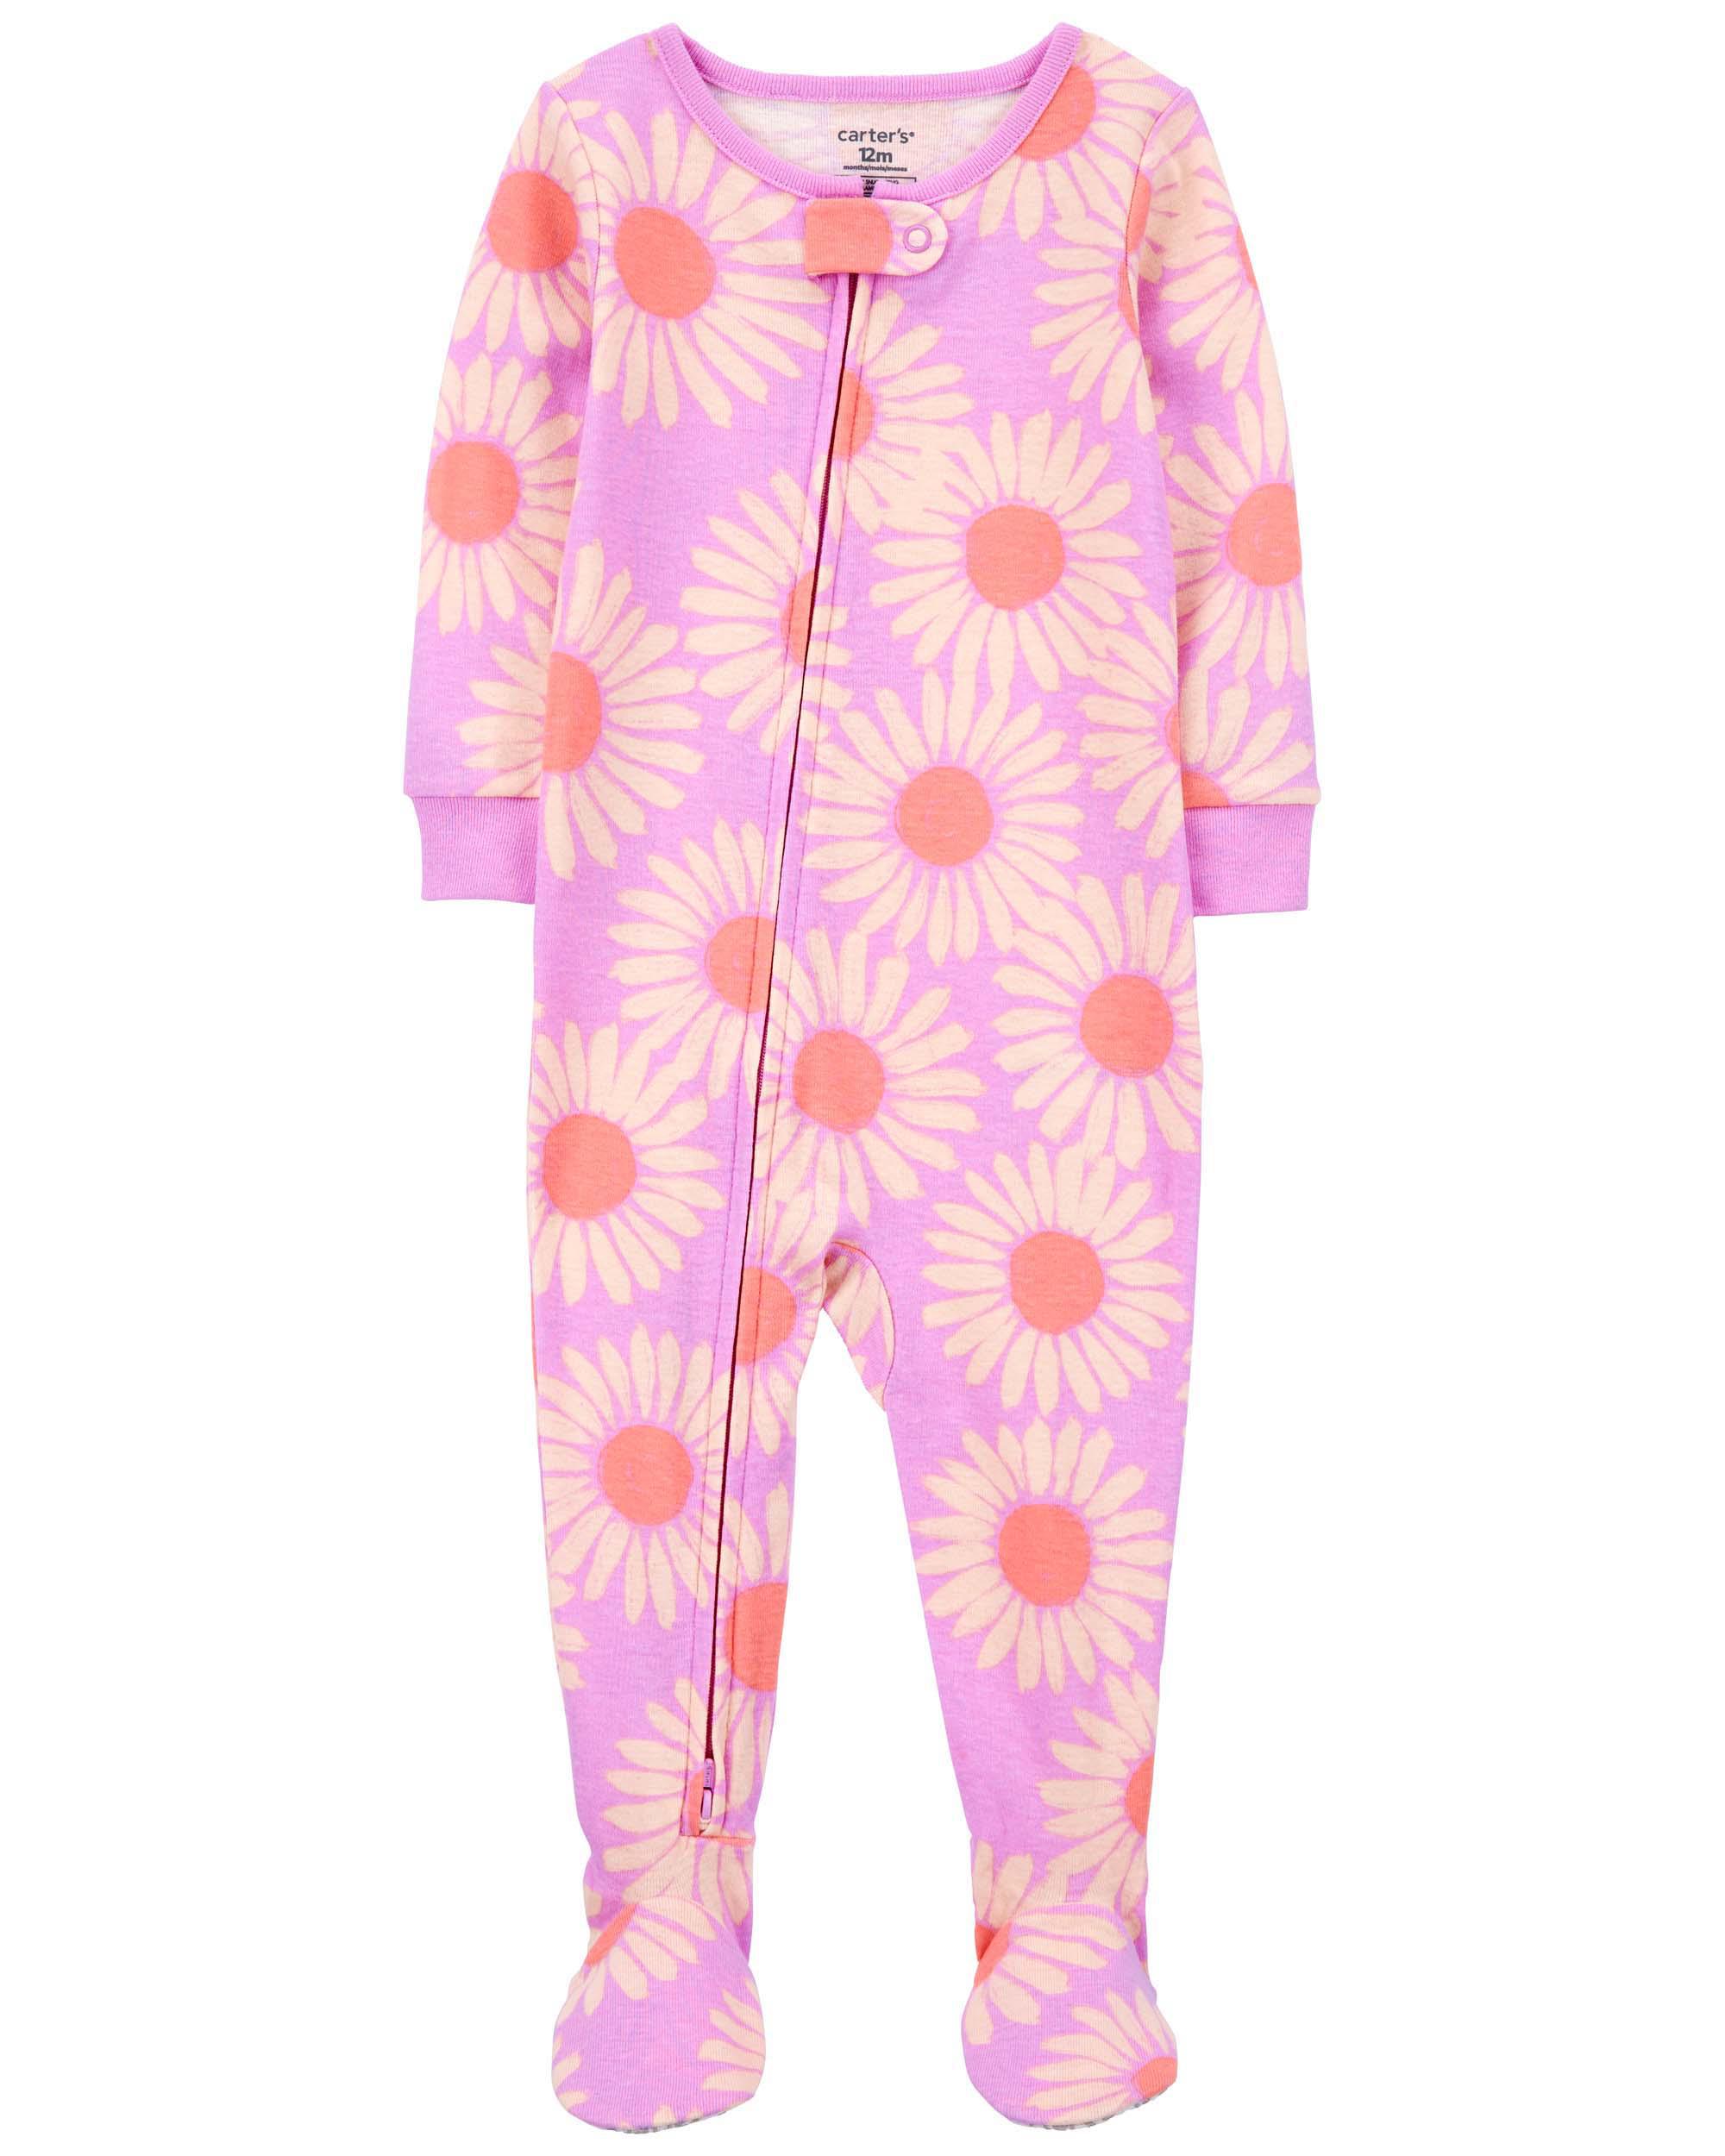 Toddler 1-Piece Sunflower 100% Snug Fit Cotton Footed Pyjamas